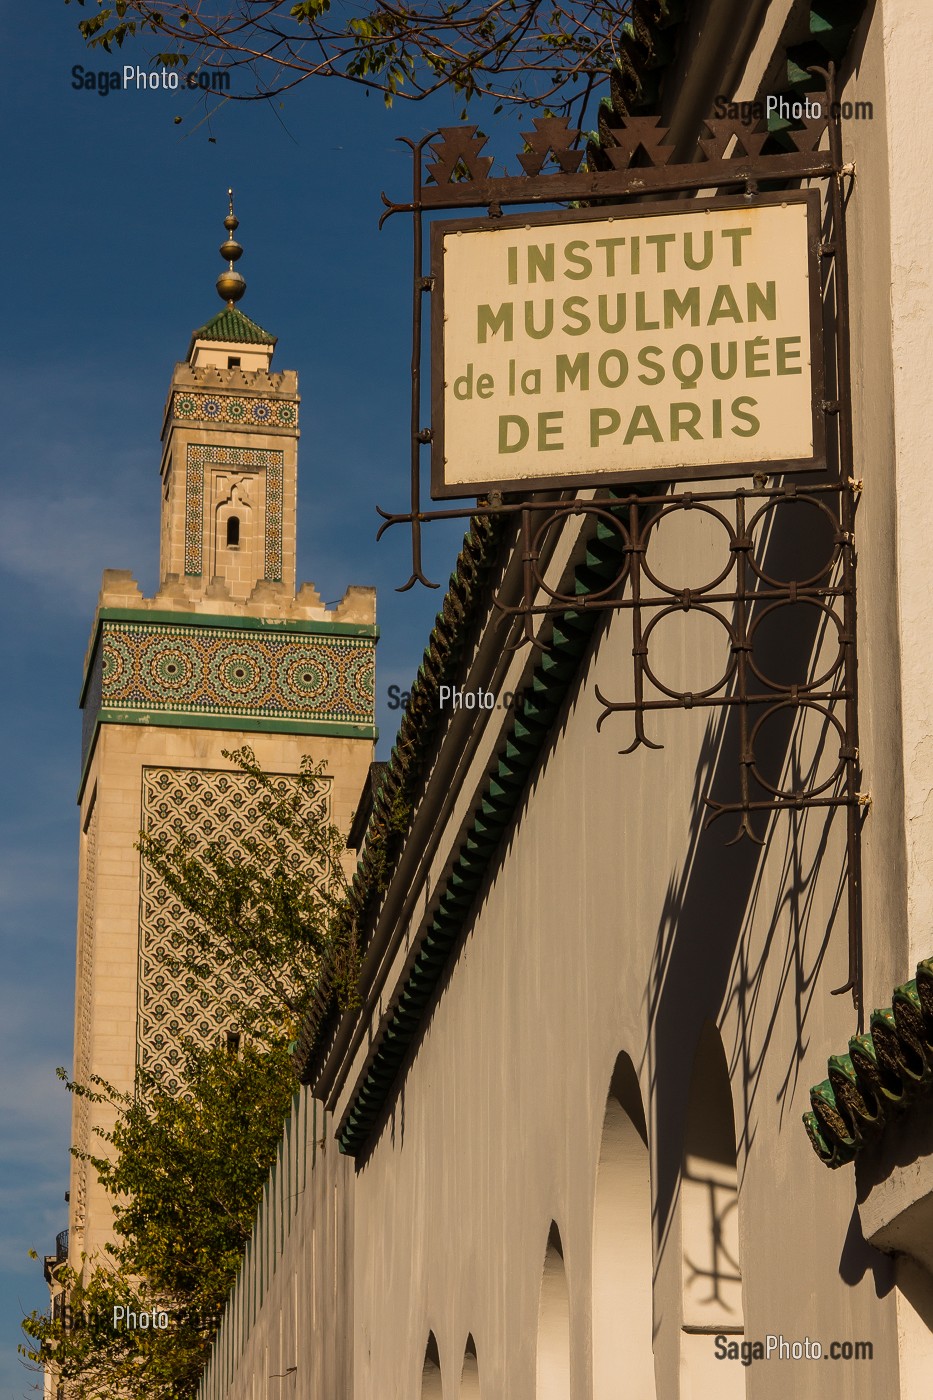 INSTITUT MUSULMAN DE LA MOSQUEE DE PARIS ET MINARET DE LA GRANDE MOSQUEE DE PARIS 